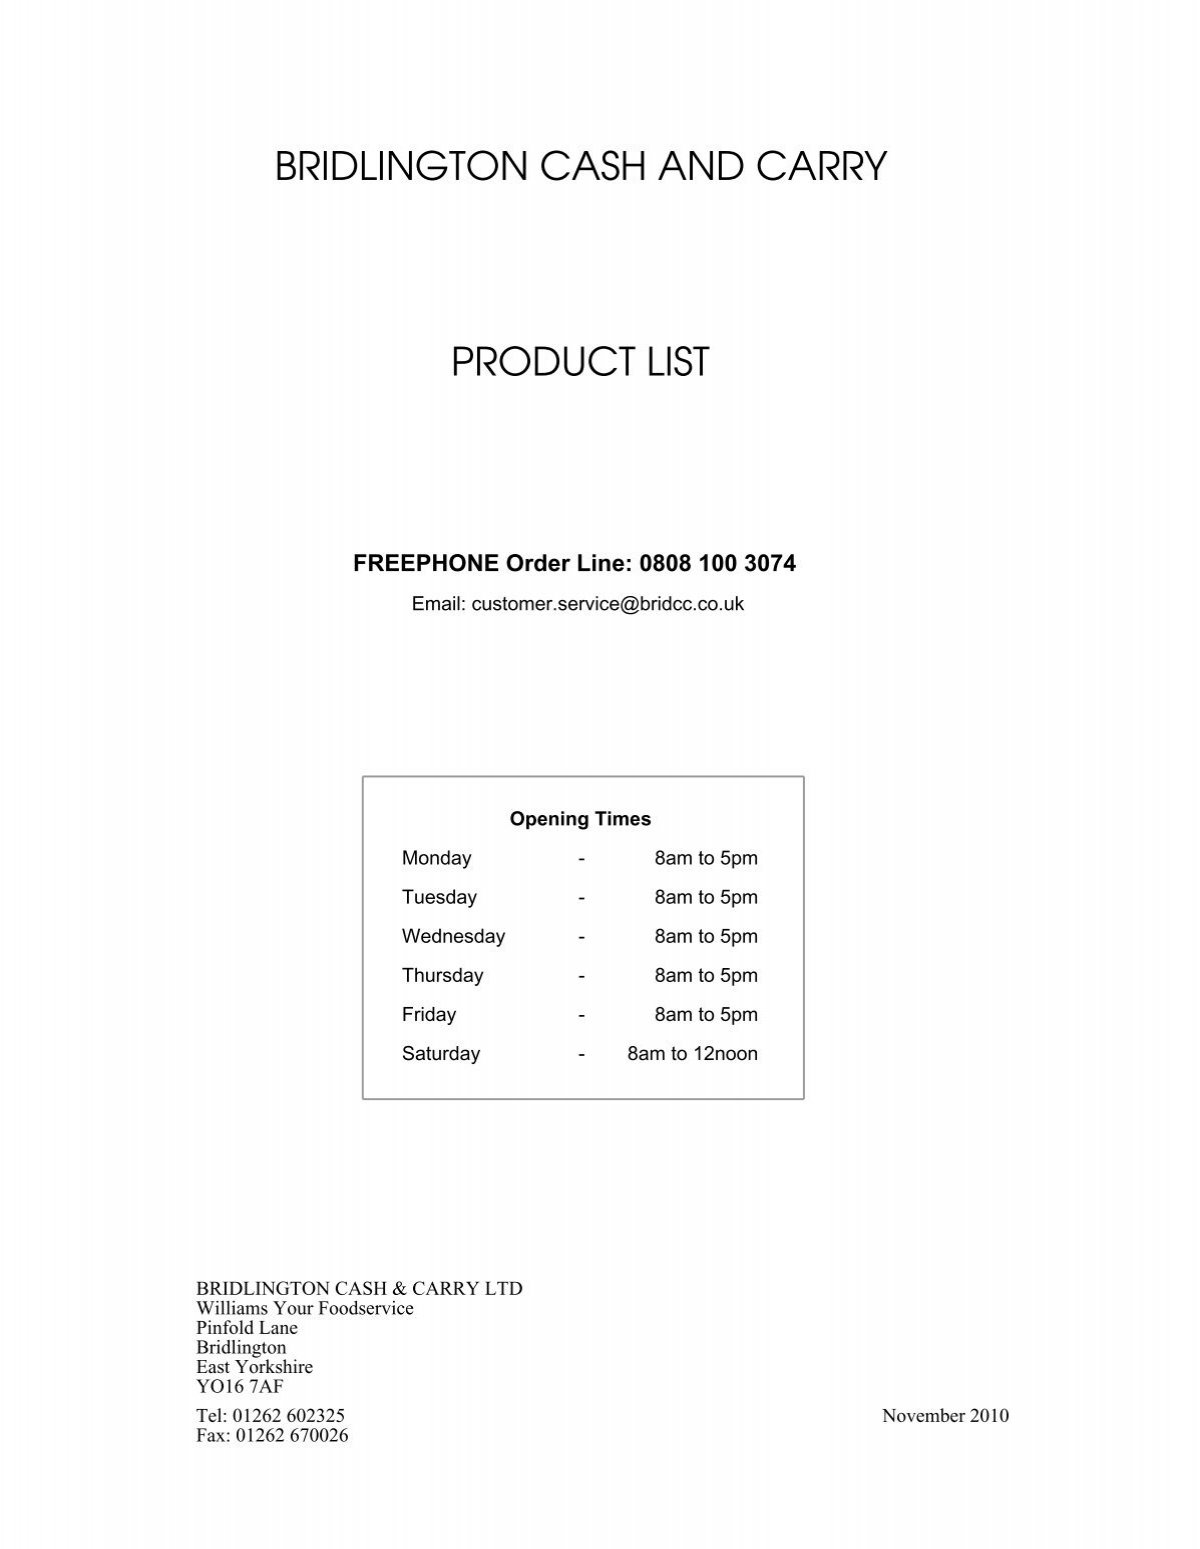 bridlington cash and carry product list - yourwilliams.co.uk